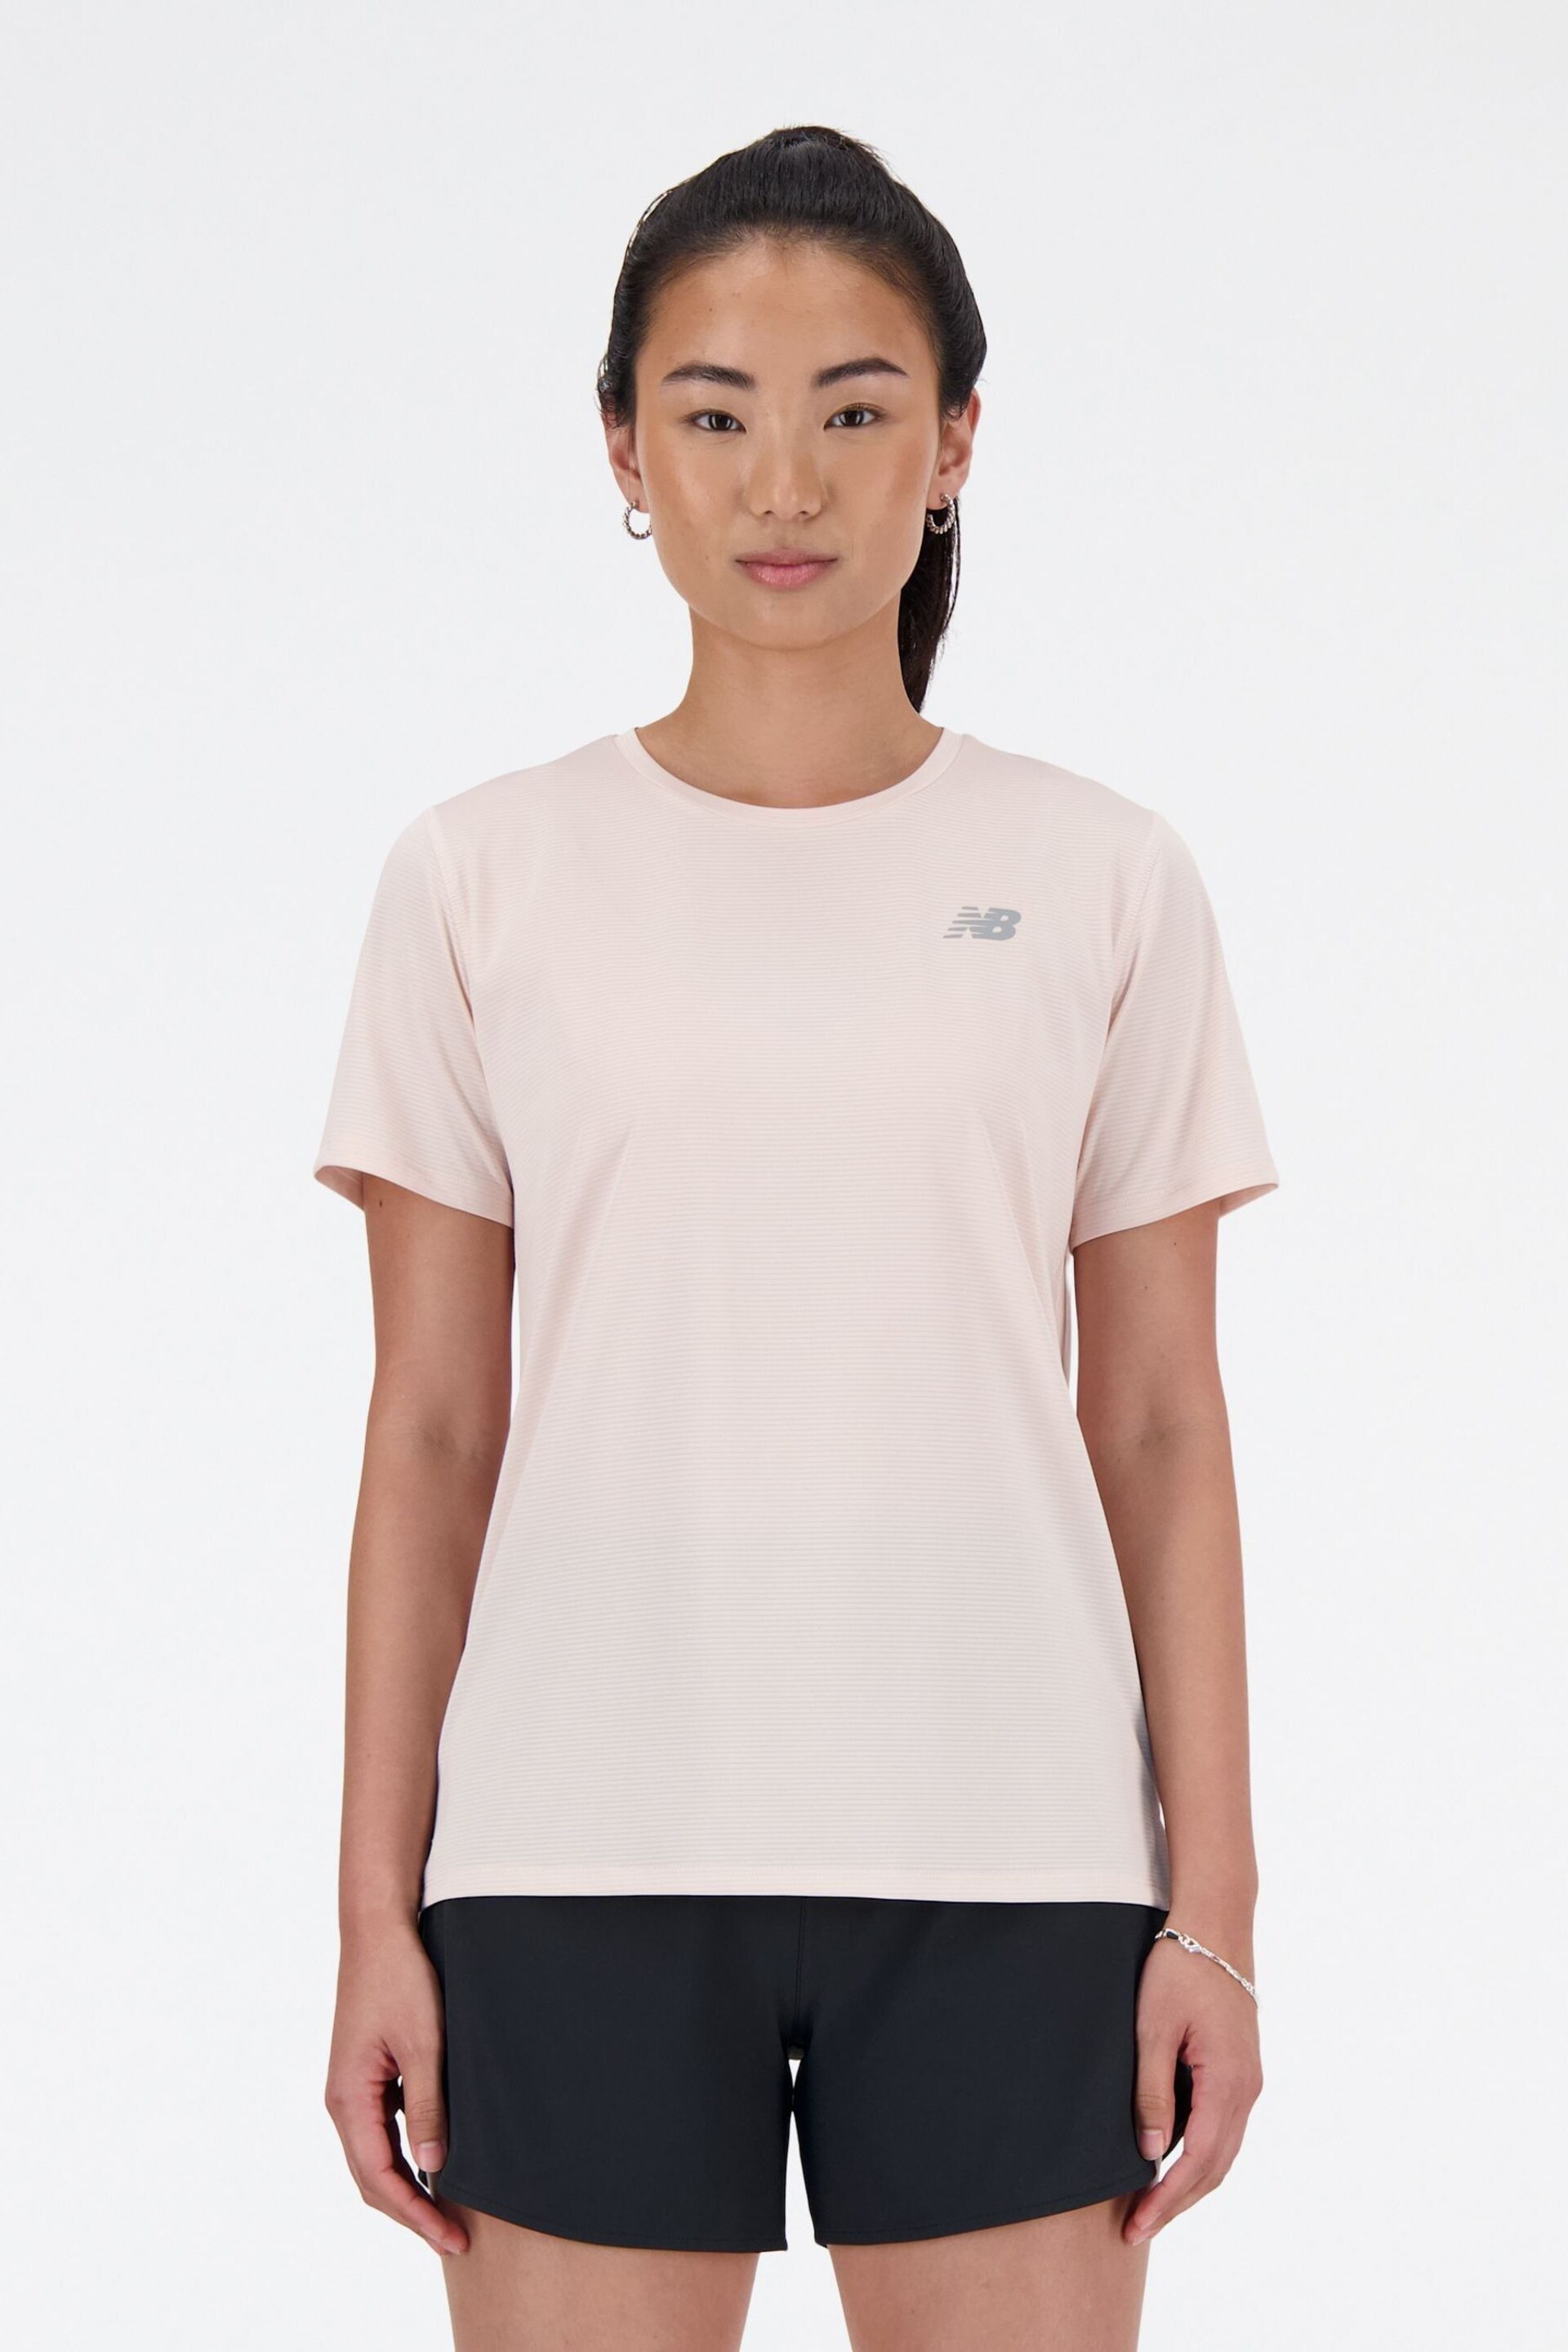 New Balance Pink Womens Short Sleeve T-Shirt - Image 1 of 4